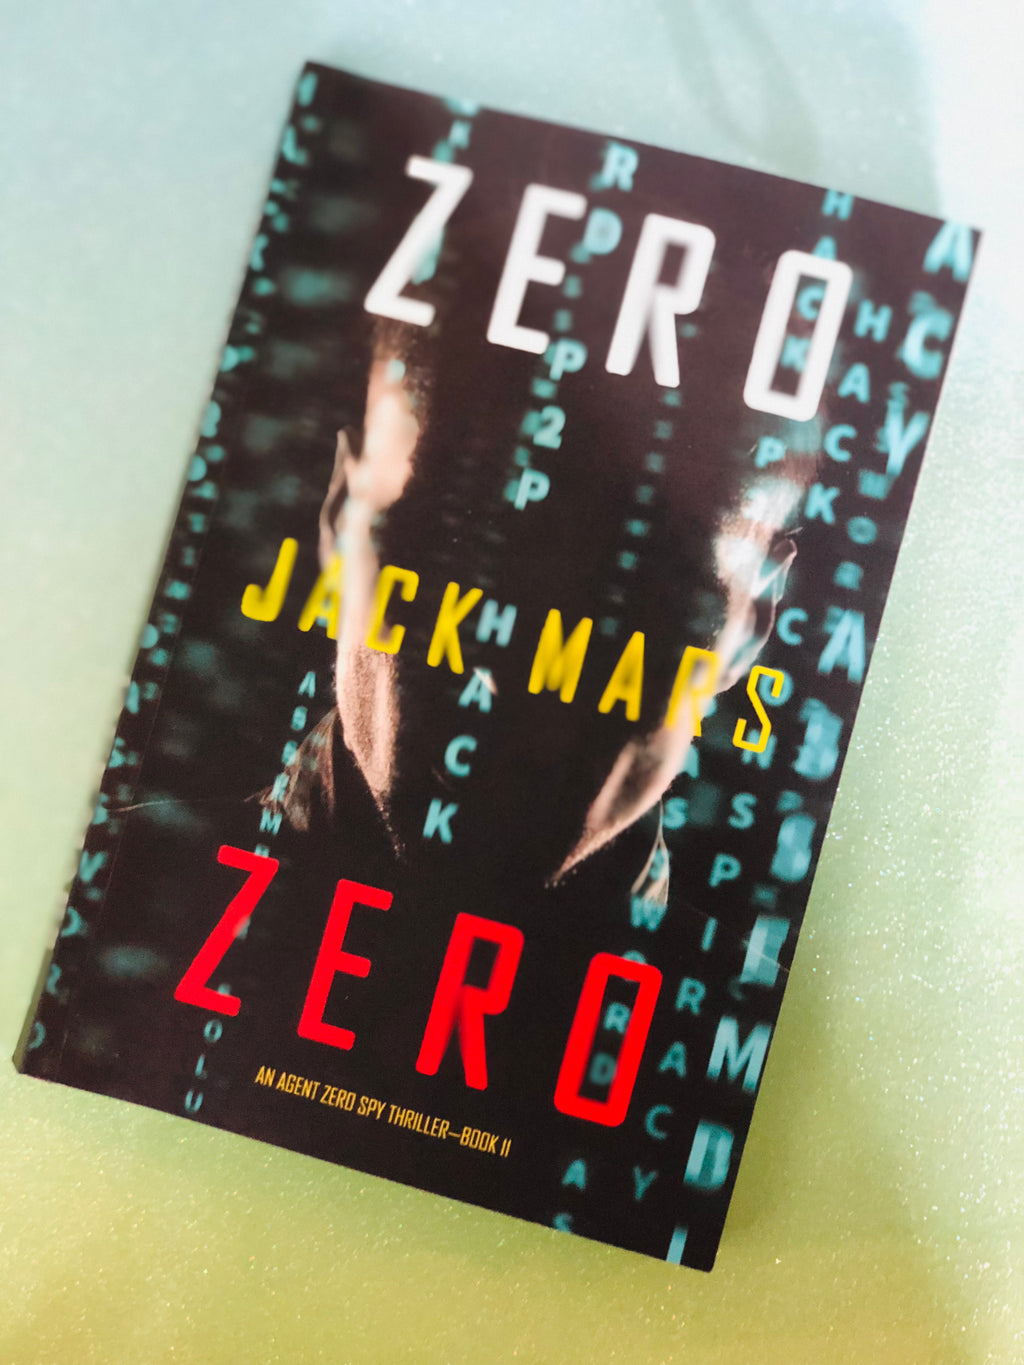 Zero Zero: An Agent Zero Spy Thriller: Book 11- By Jack Mars